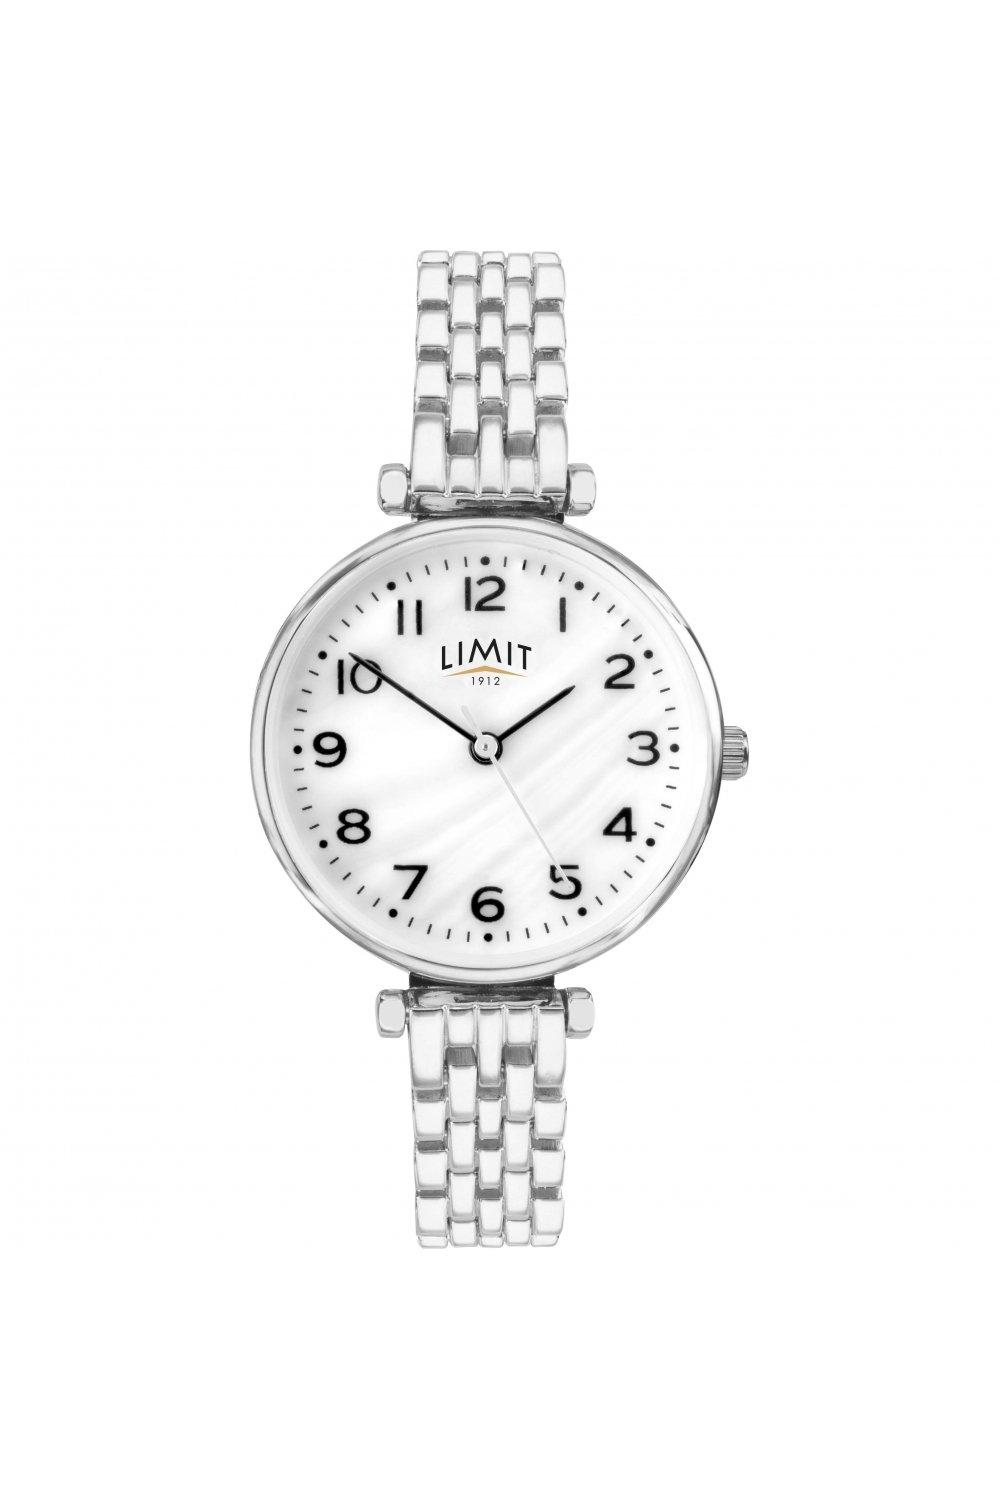 Watches | Classic Analogue Quartz Watch - 6496.01 | Limit